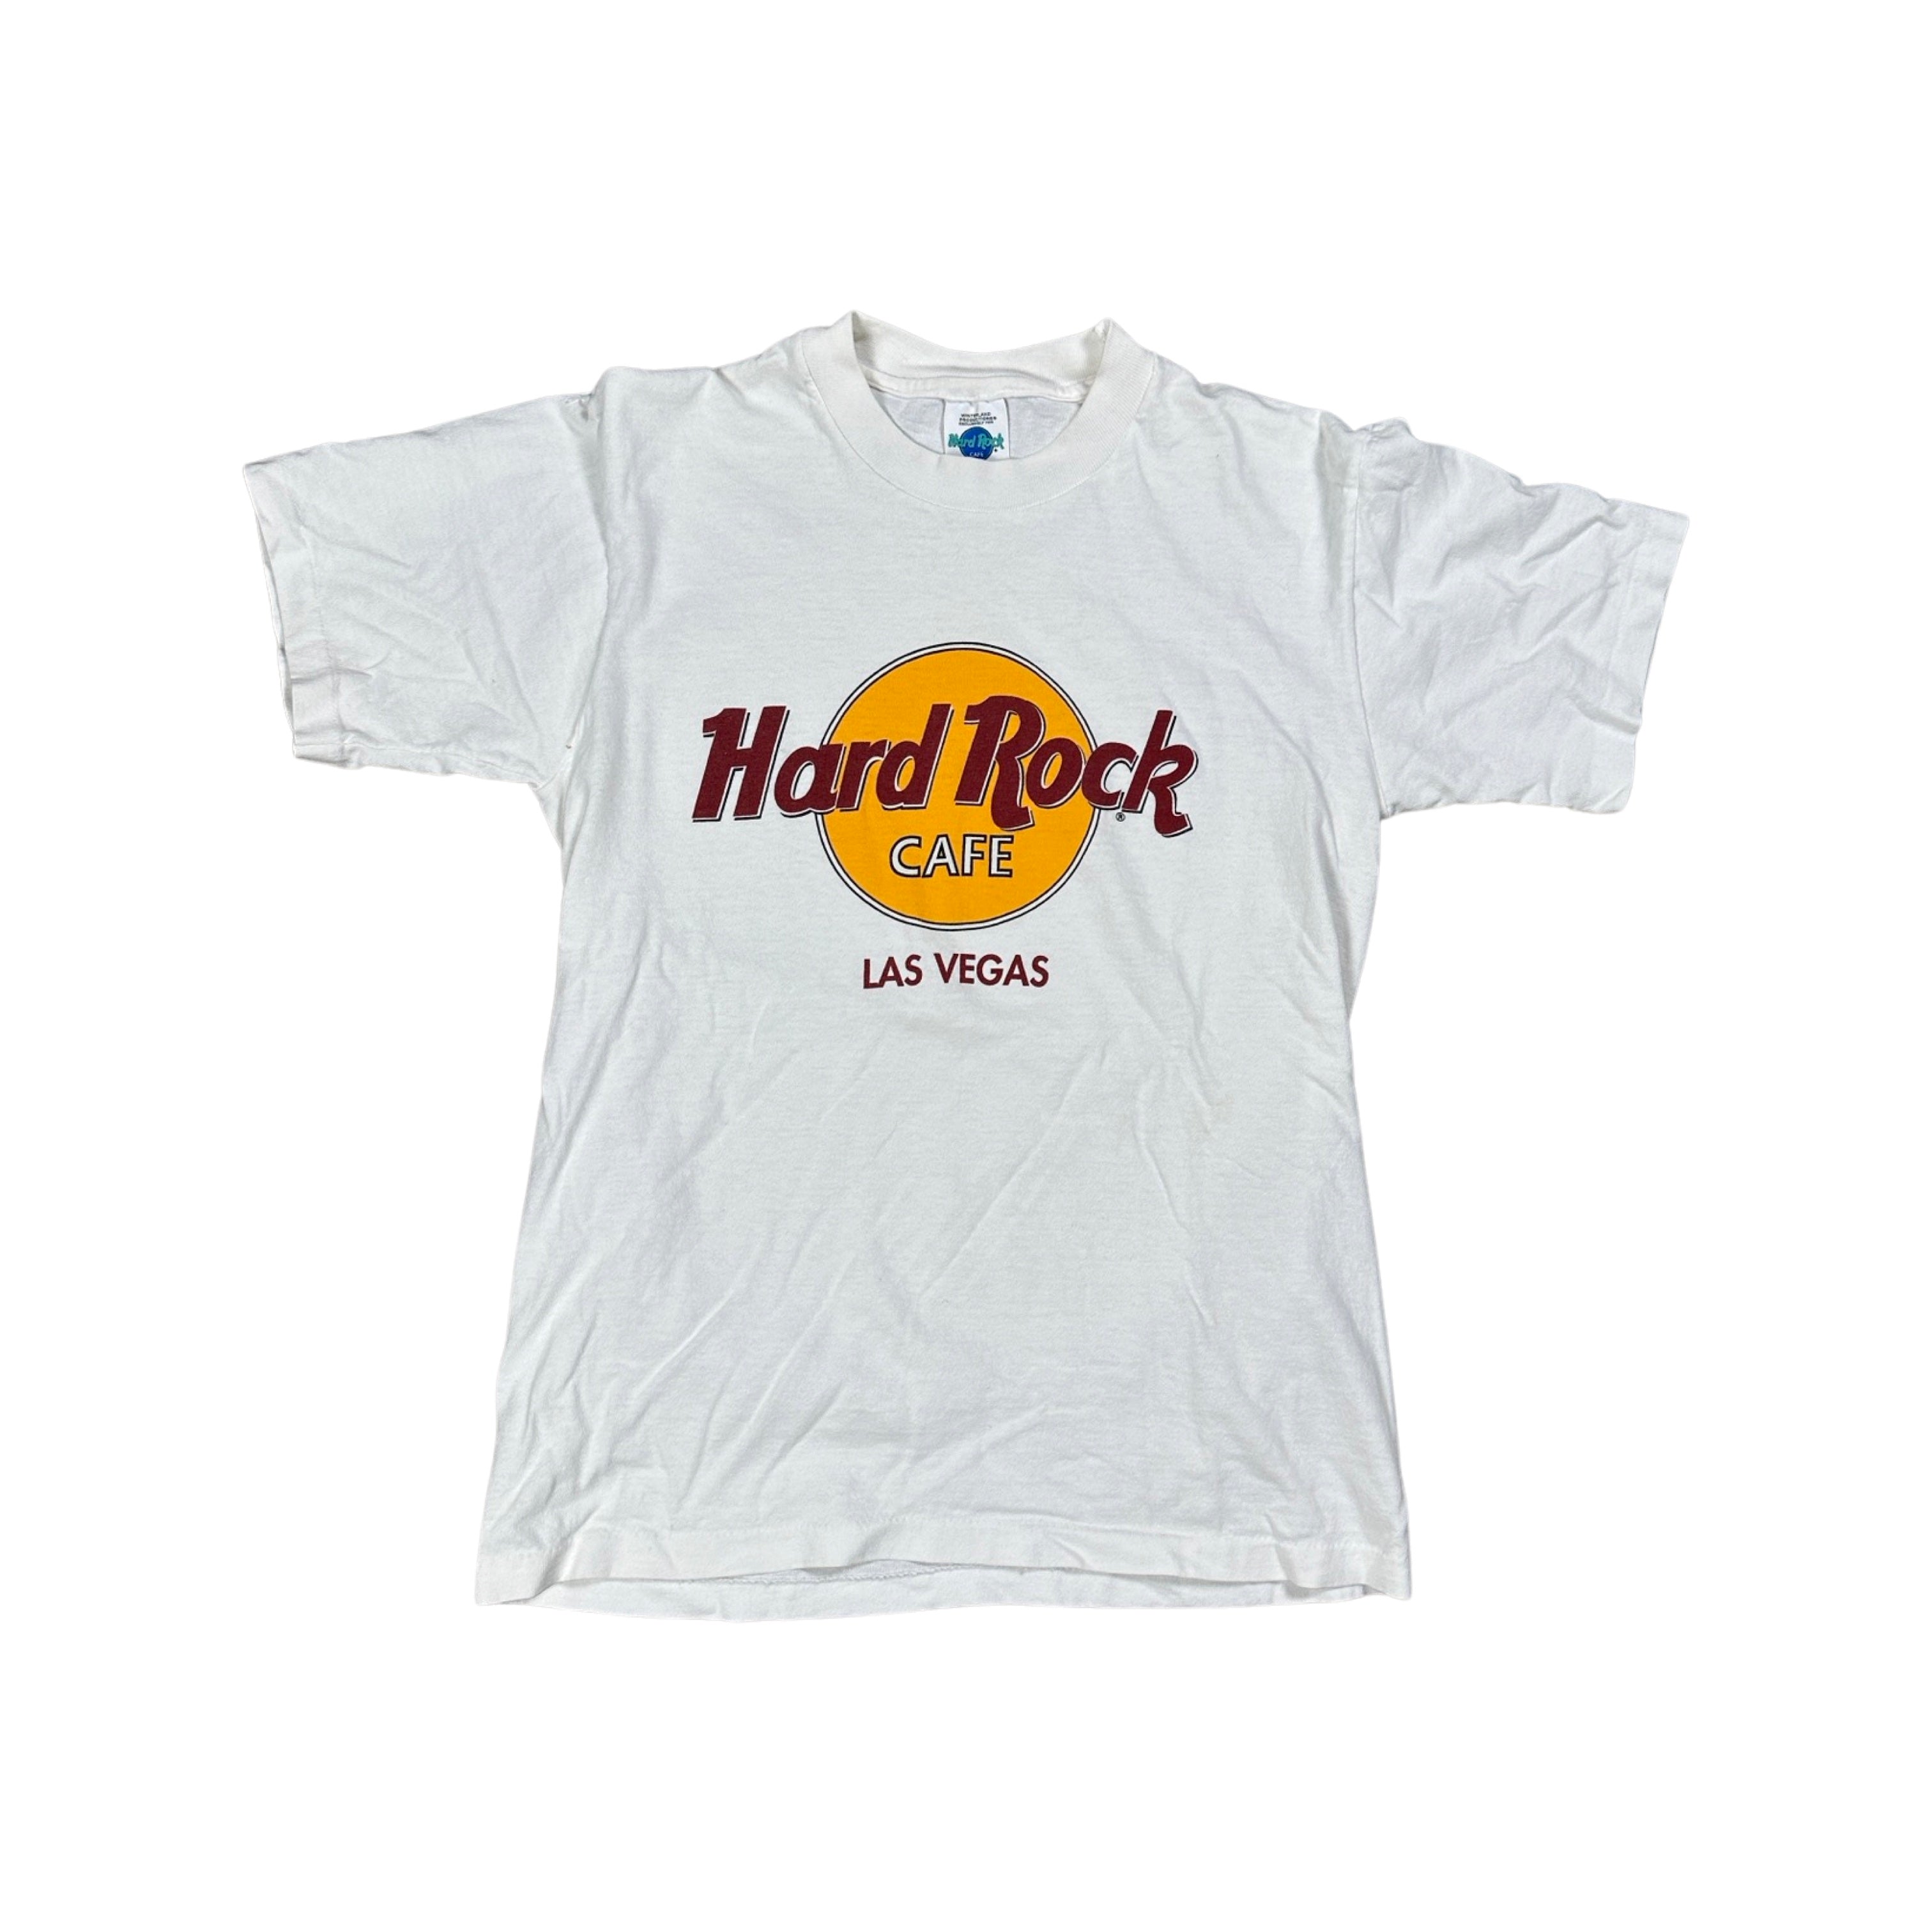 Hard Rock Cafe Las Vegas 90s T-Shirt (Small)